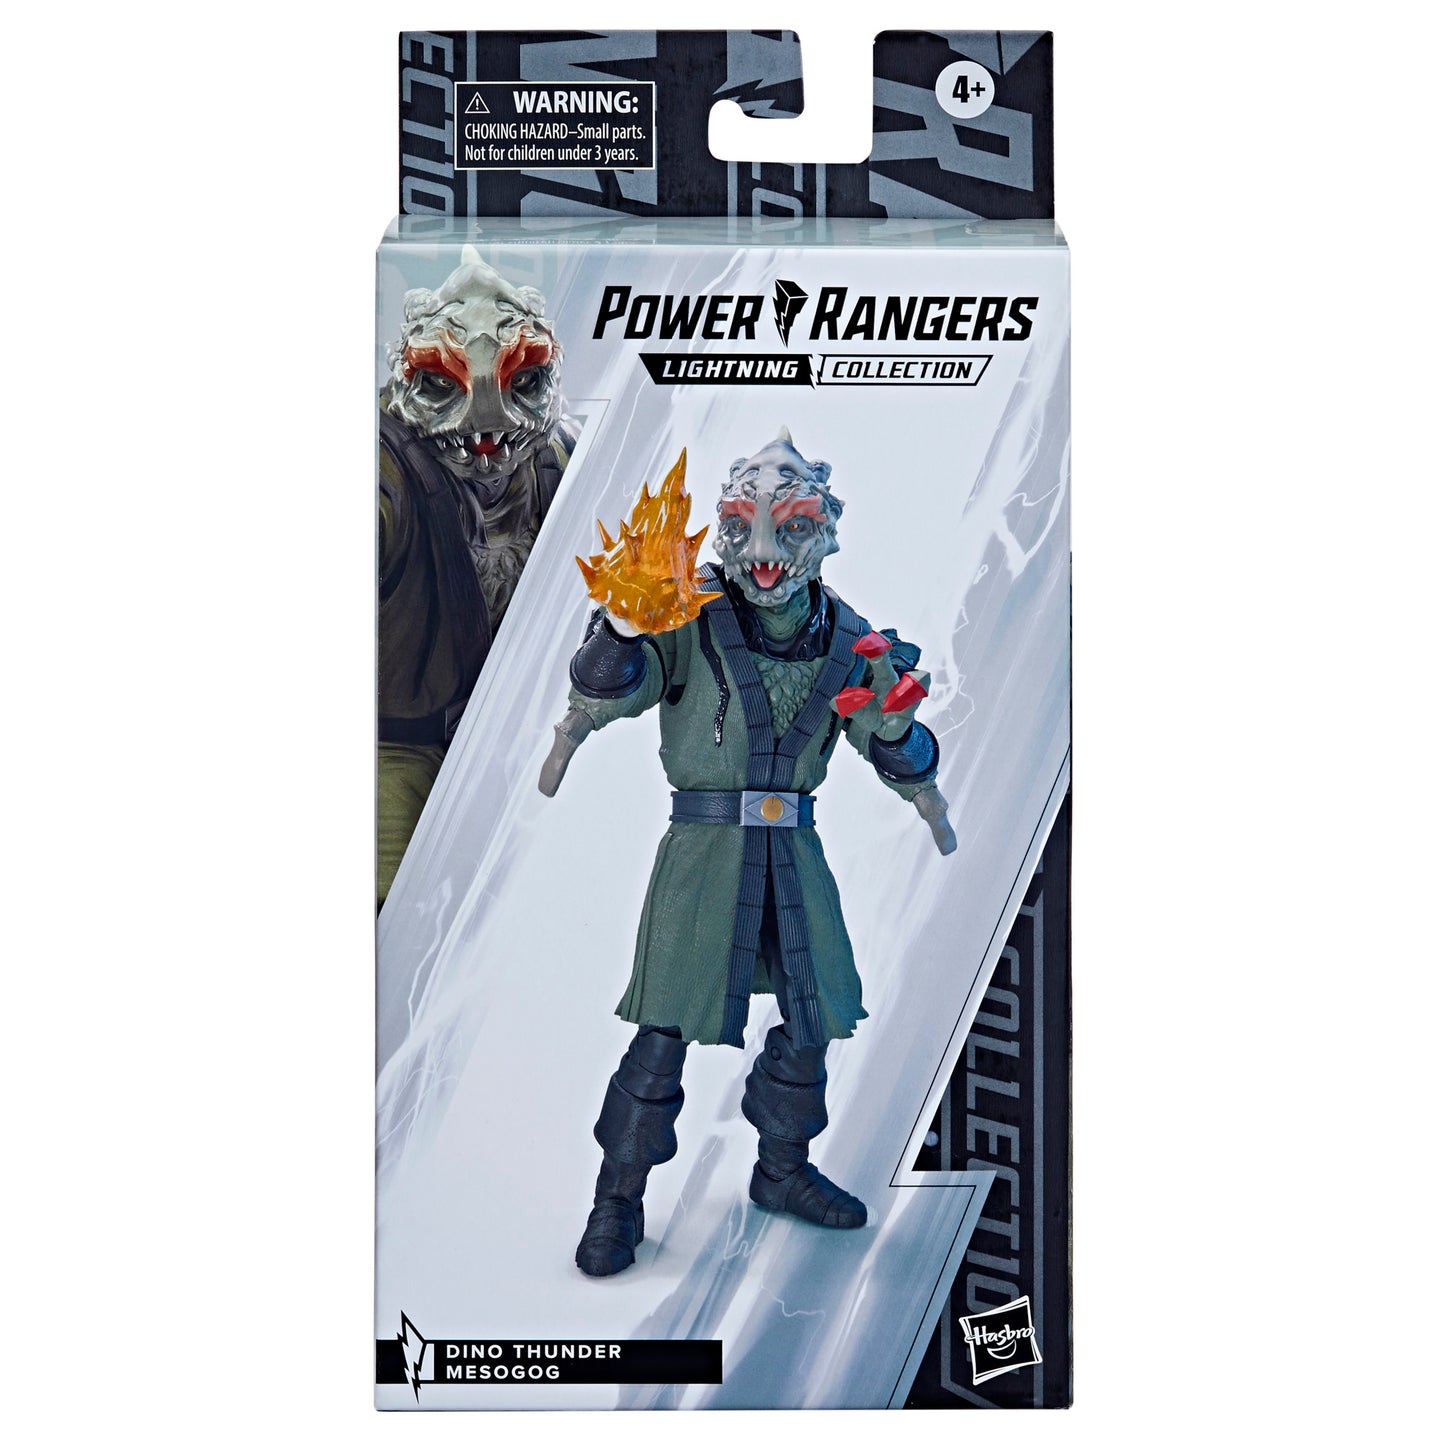 Power Rangers Lightning Collection Dino Thunder Mesogog Figure Box - Heretoserveyou